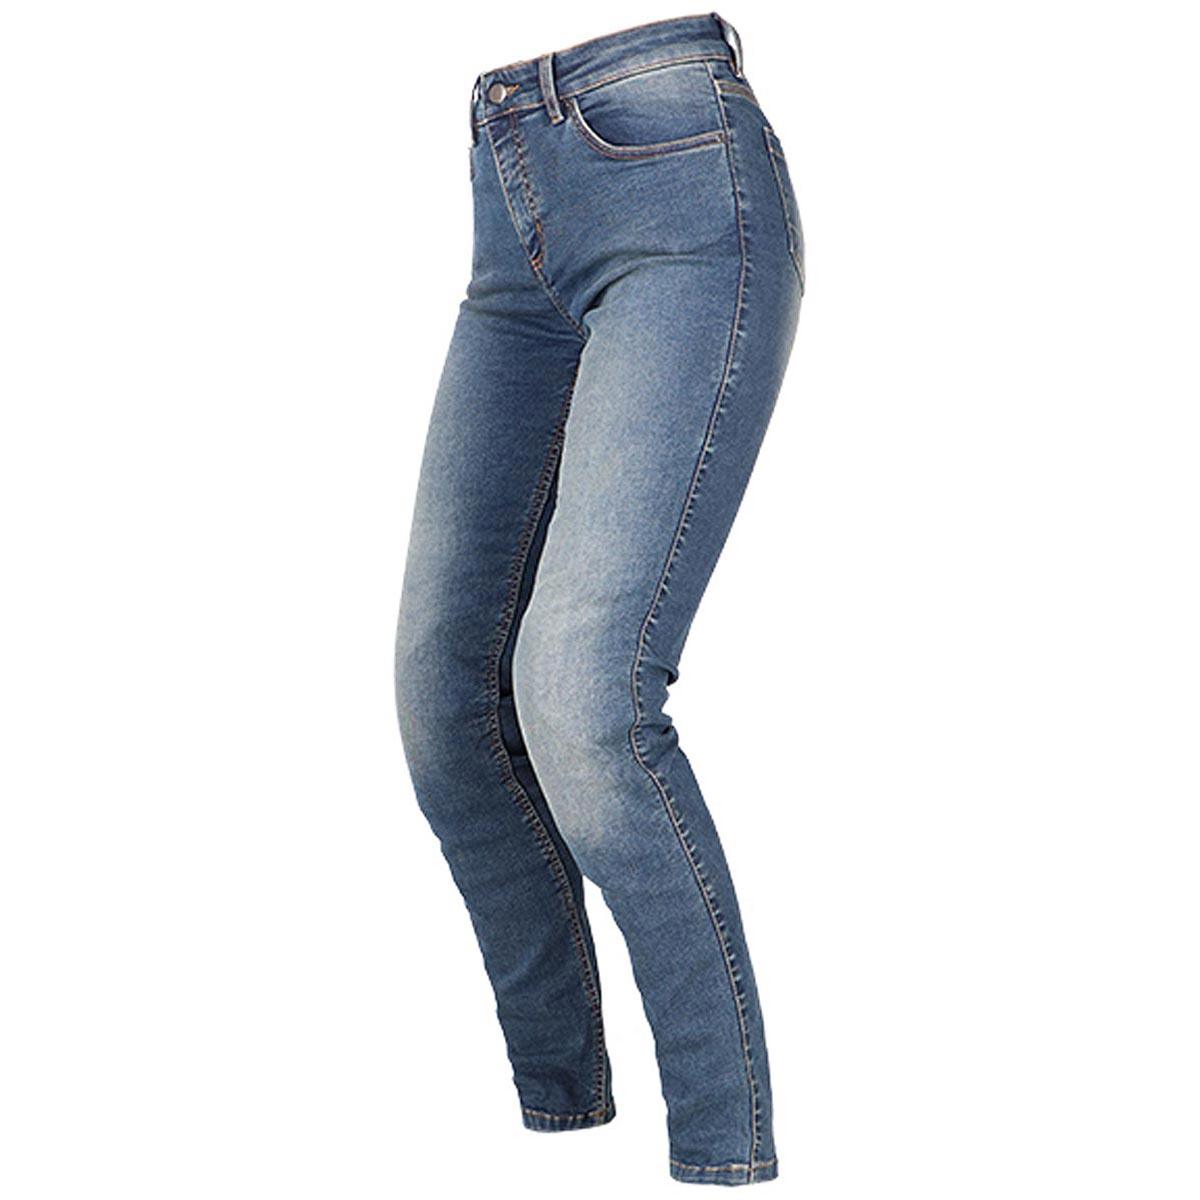 Richa Original 2 Slim Cut Jeans Ladies 30in Leg  - Armoured Jeans